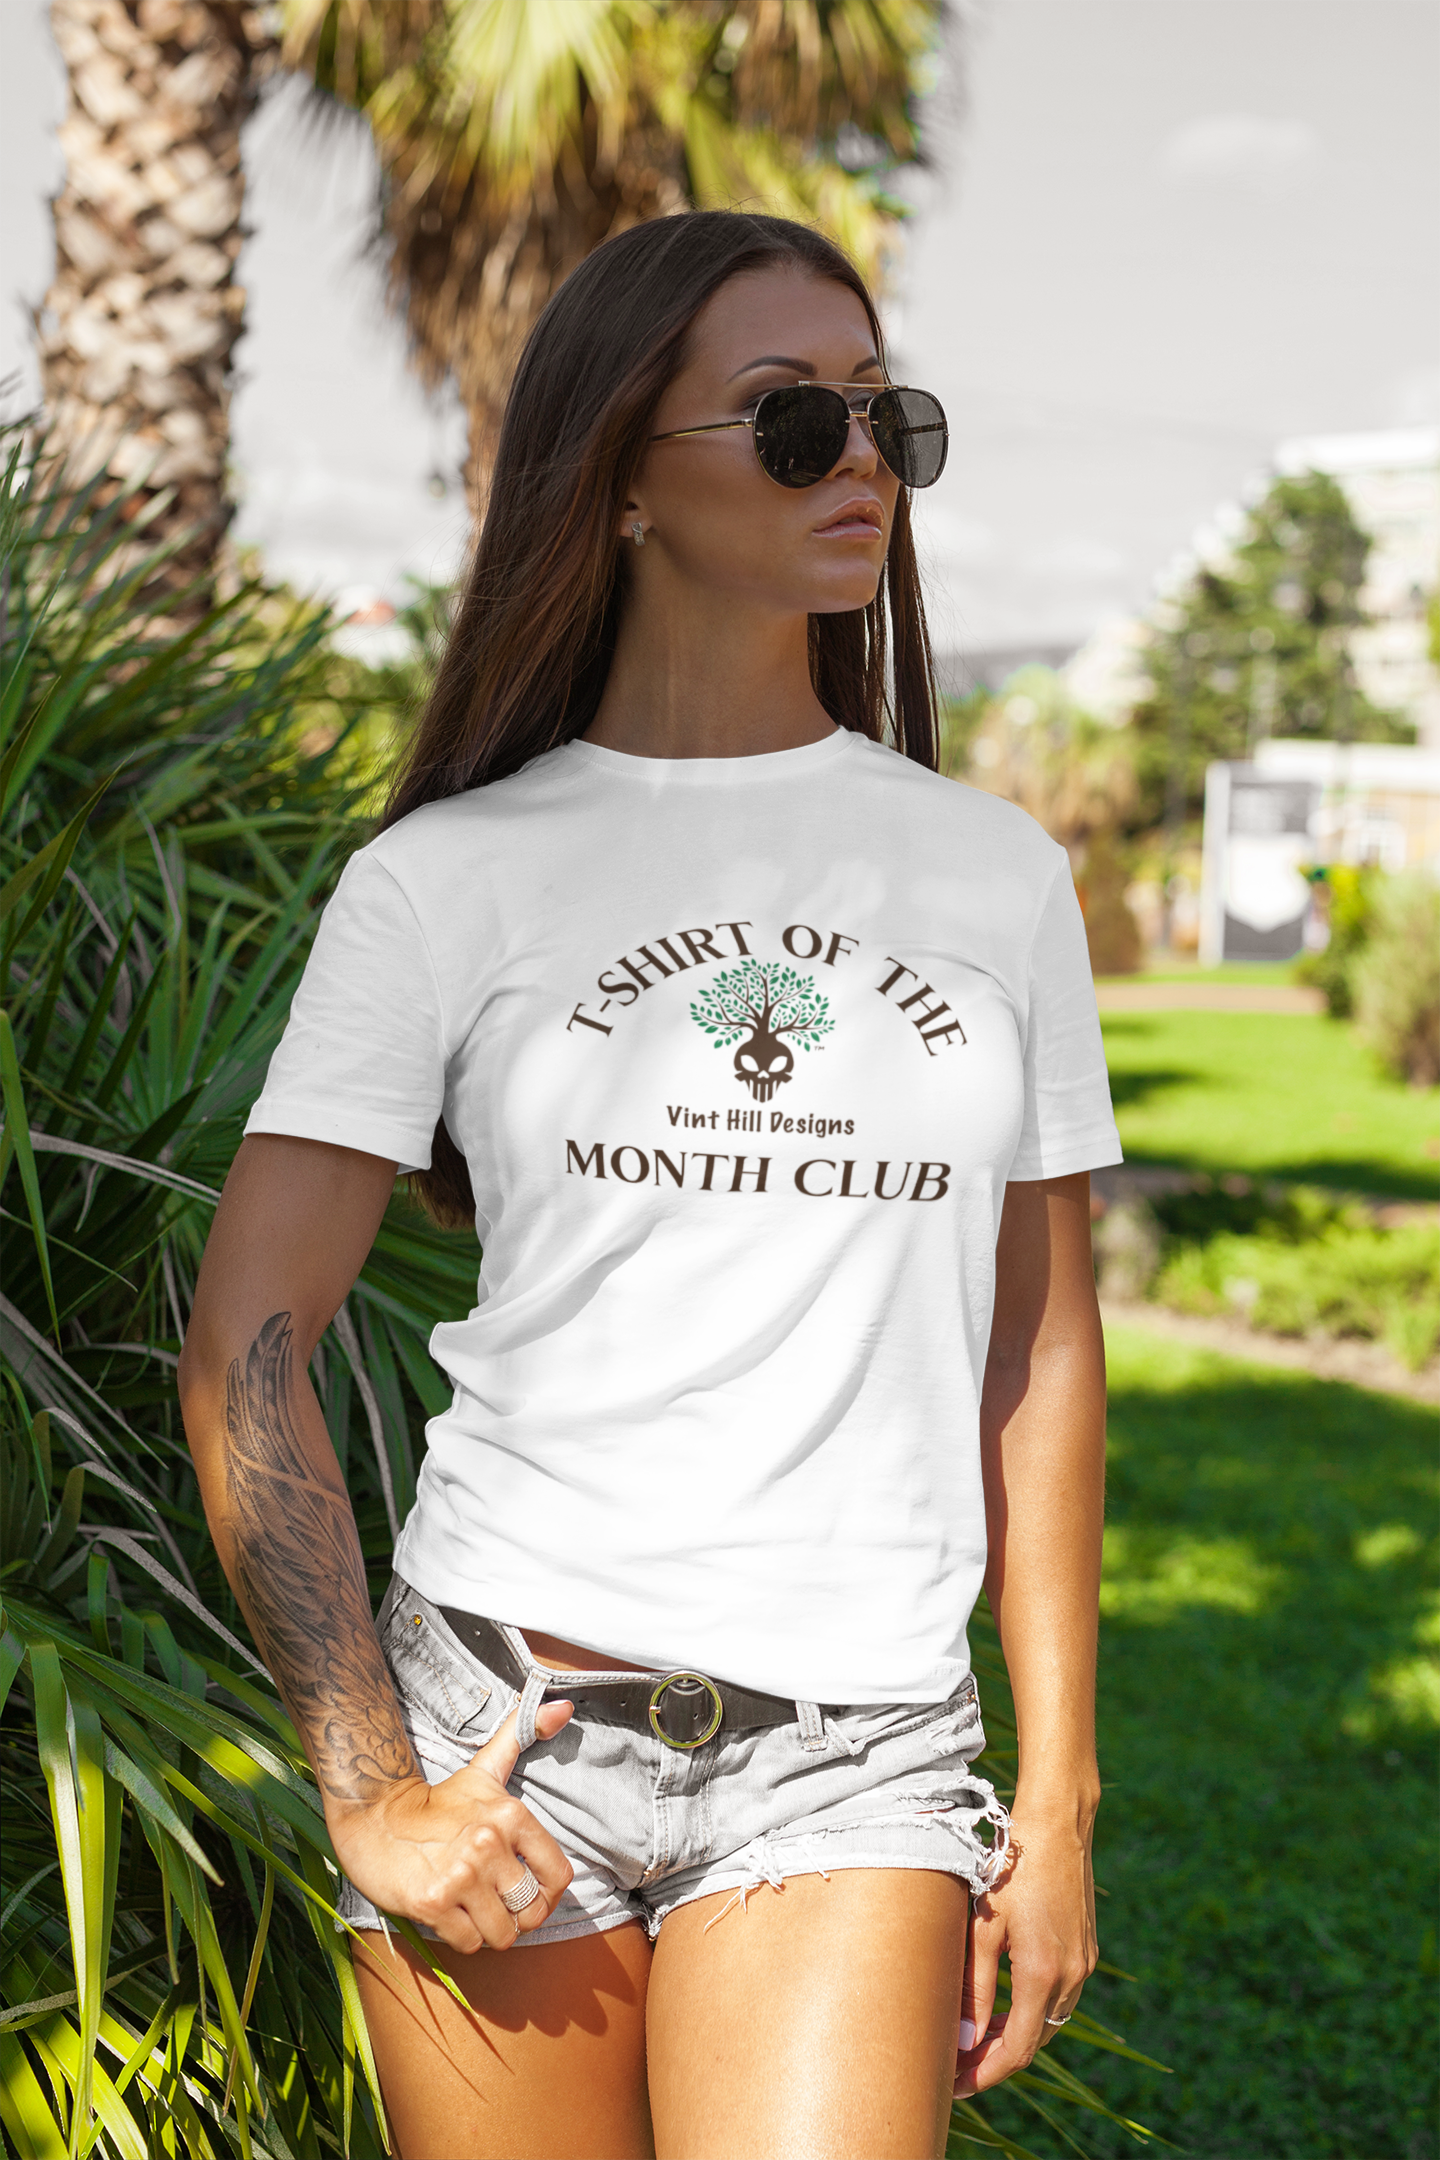 A2B T-Shirt of the Month Club Vint Hill Designs